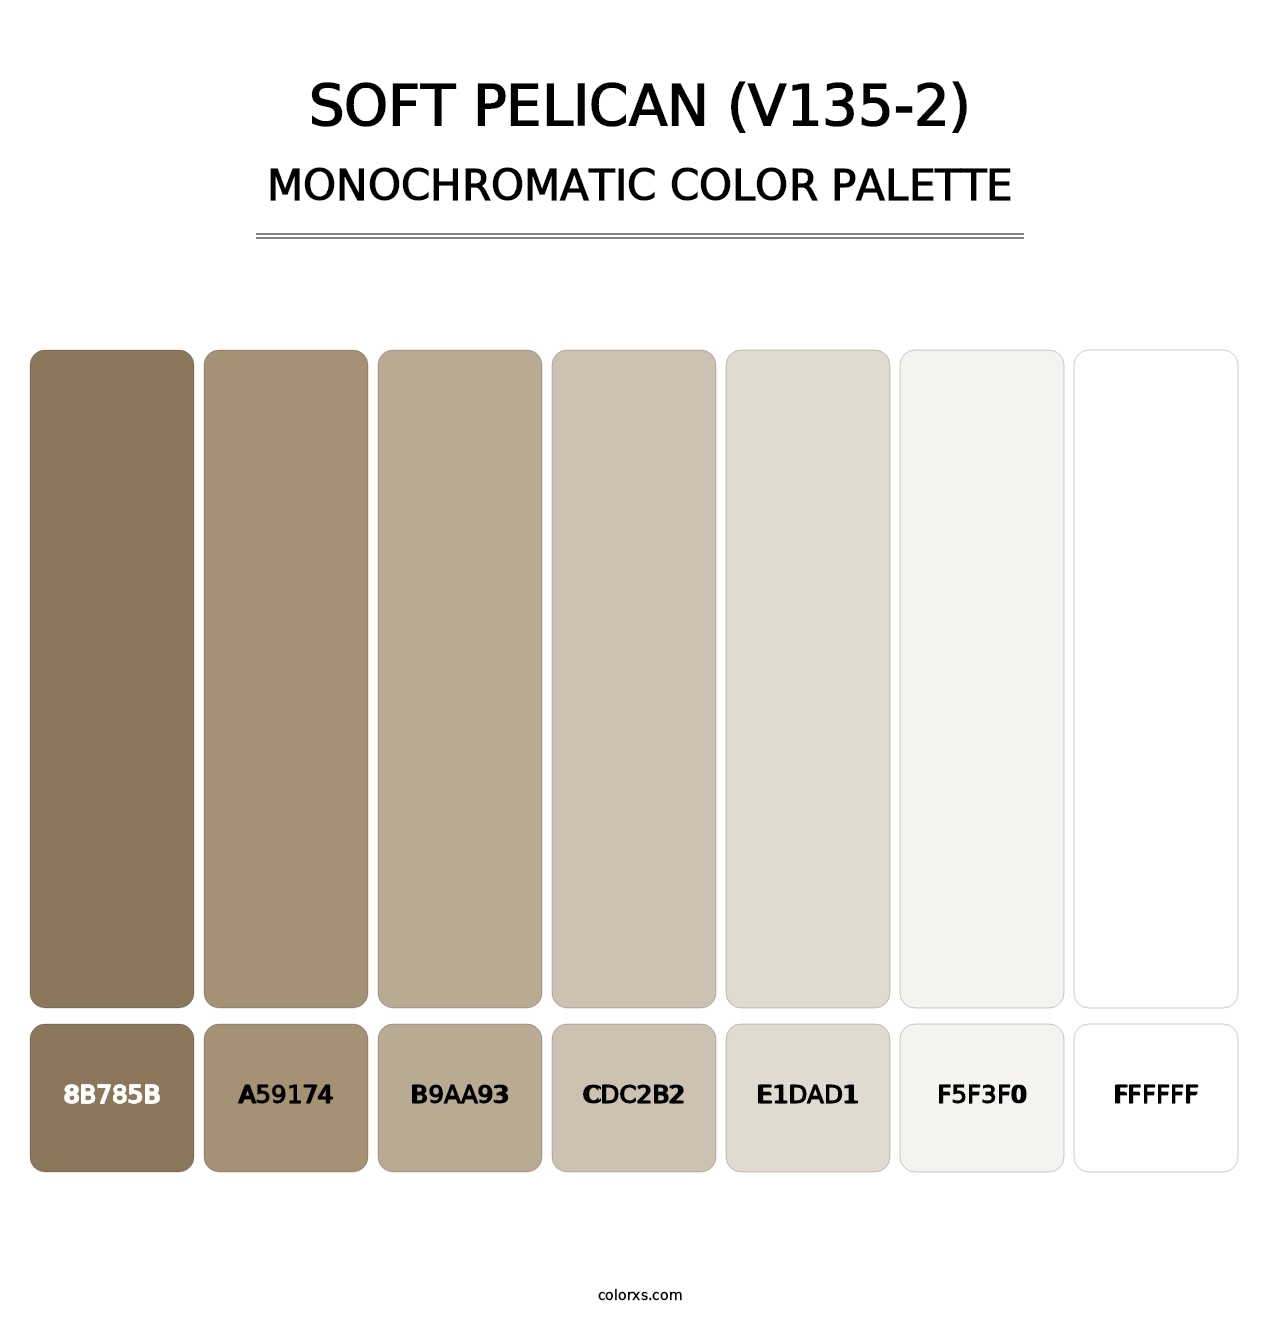 Soft Pelican (V135-2) - Monochromatic Color Palette